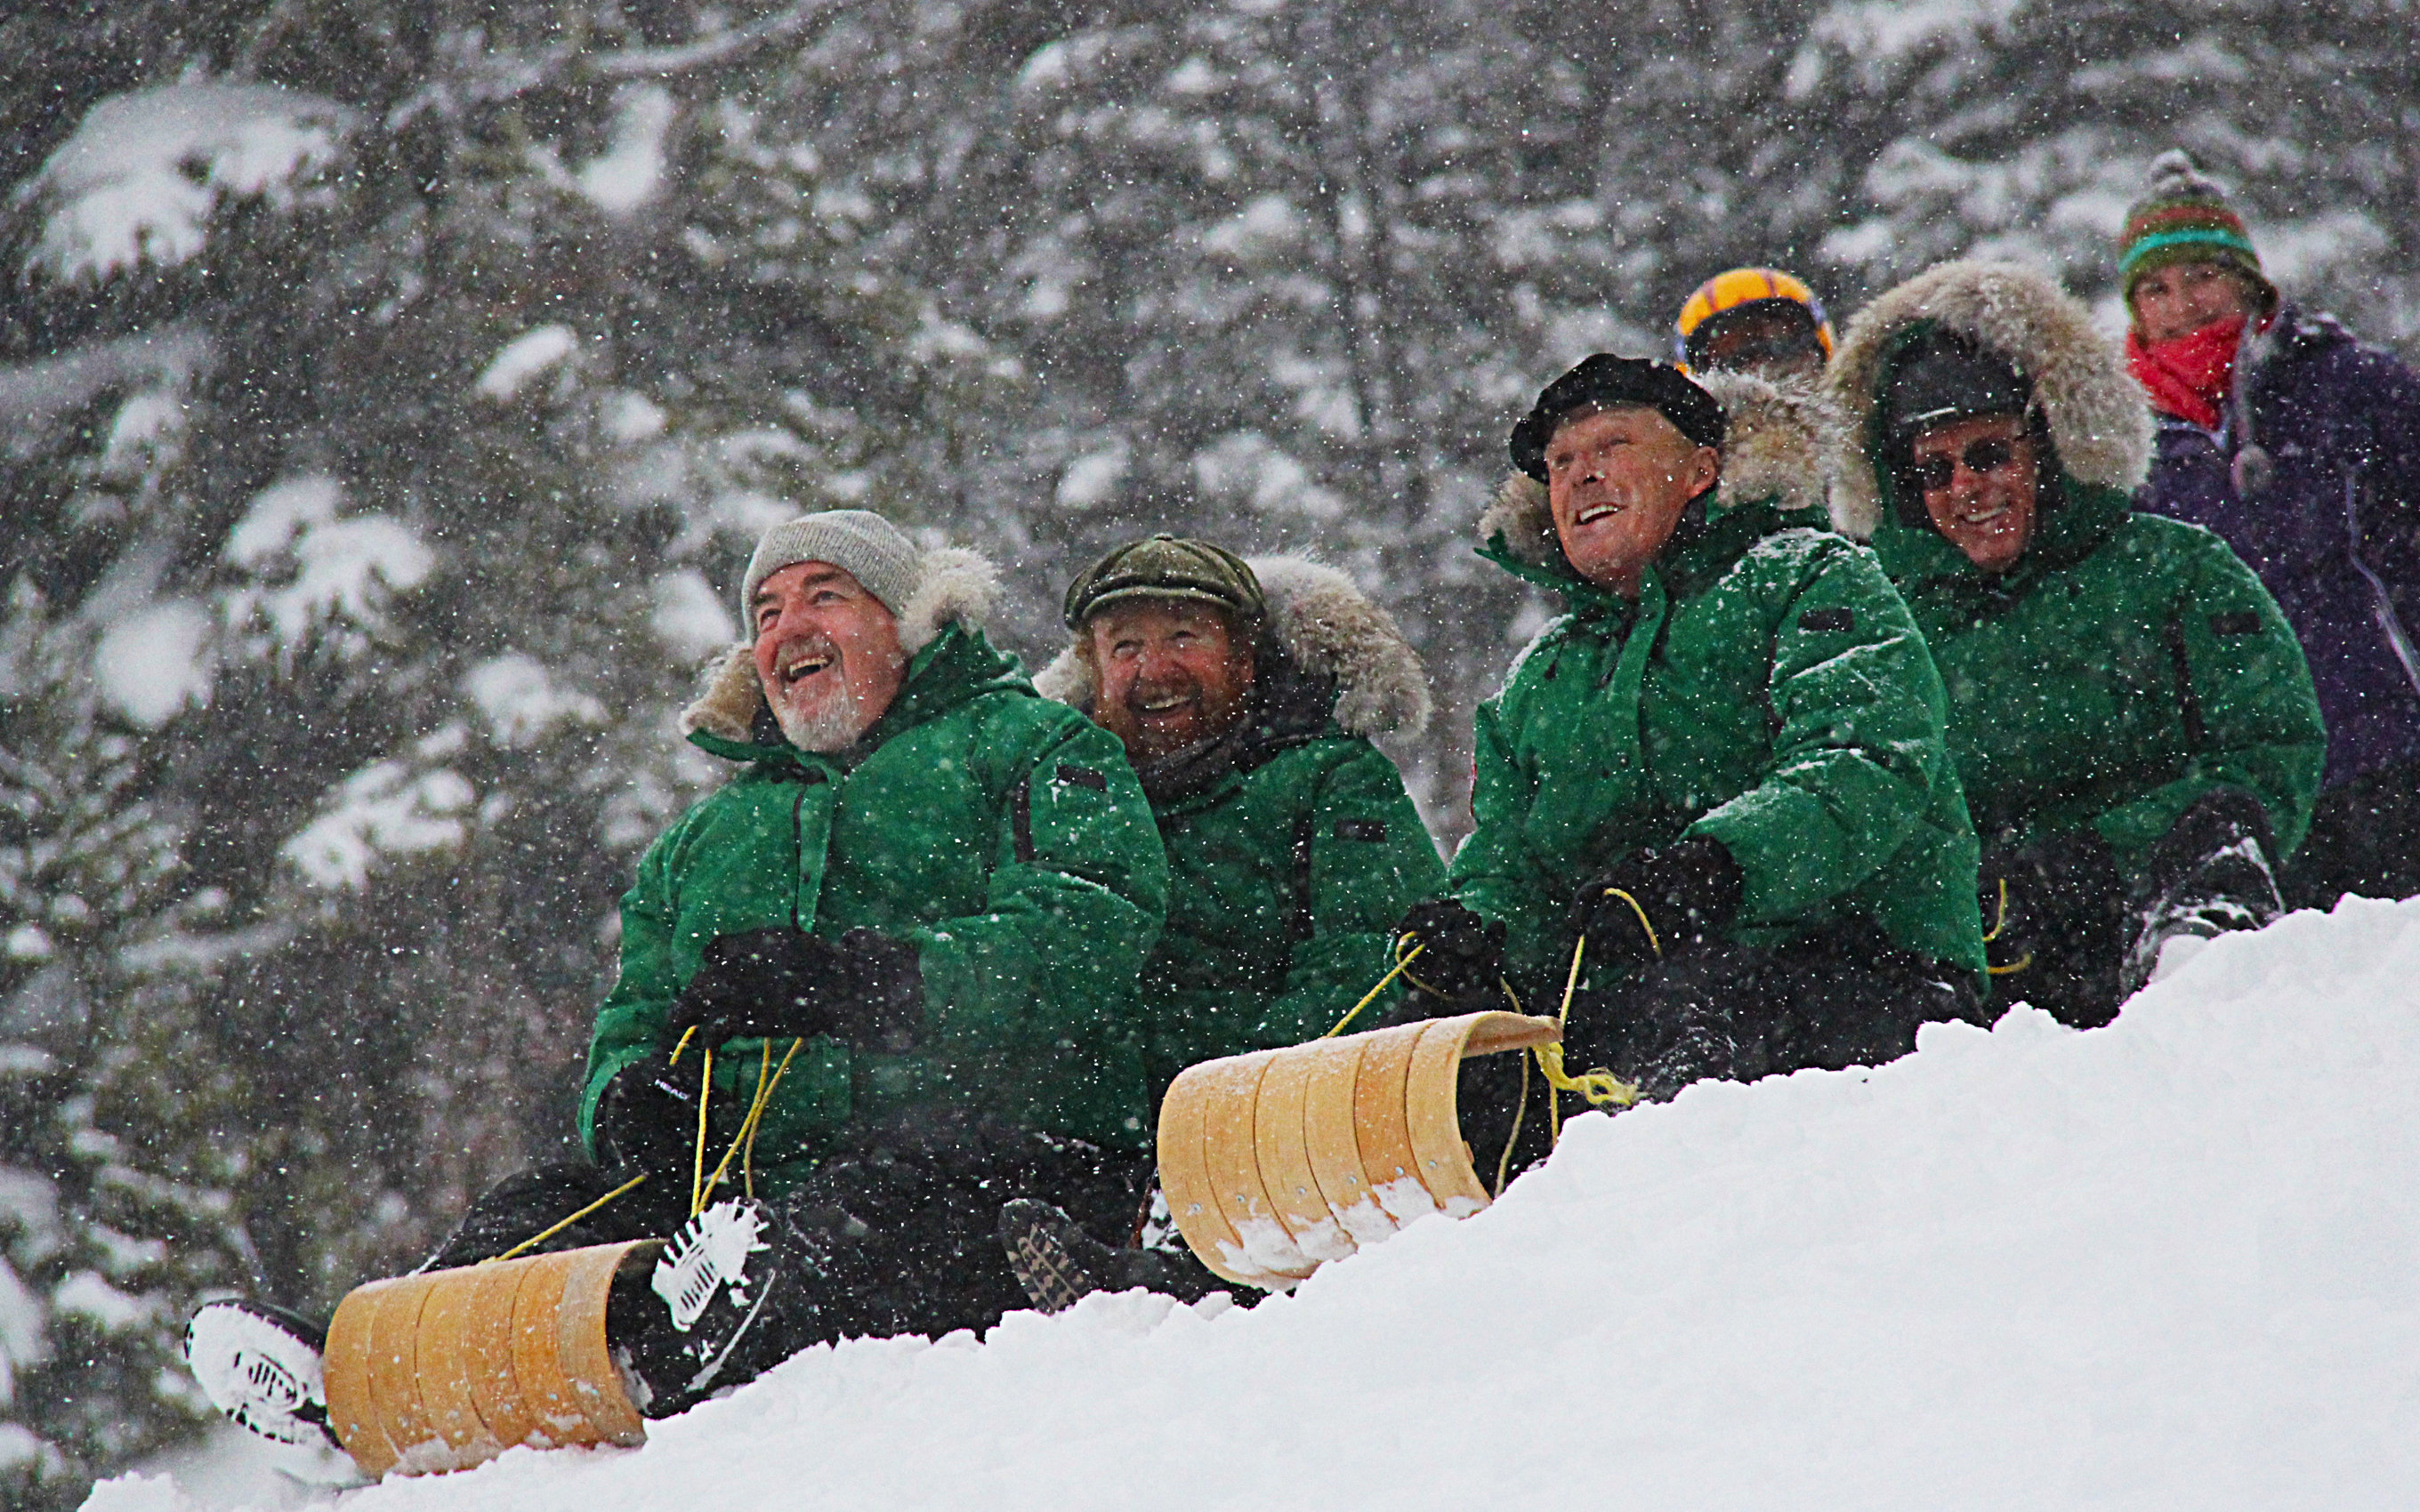 The Irish Rovers filming The Irish Rovers Christmas at Sunshine Village in Banff National Park.